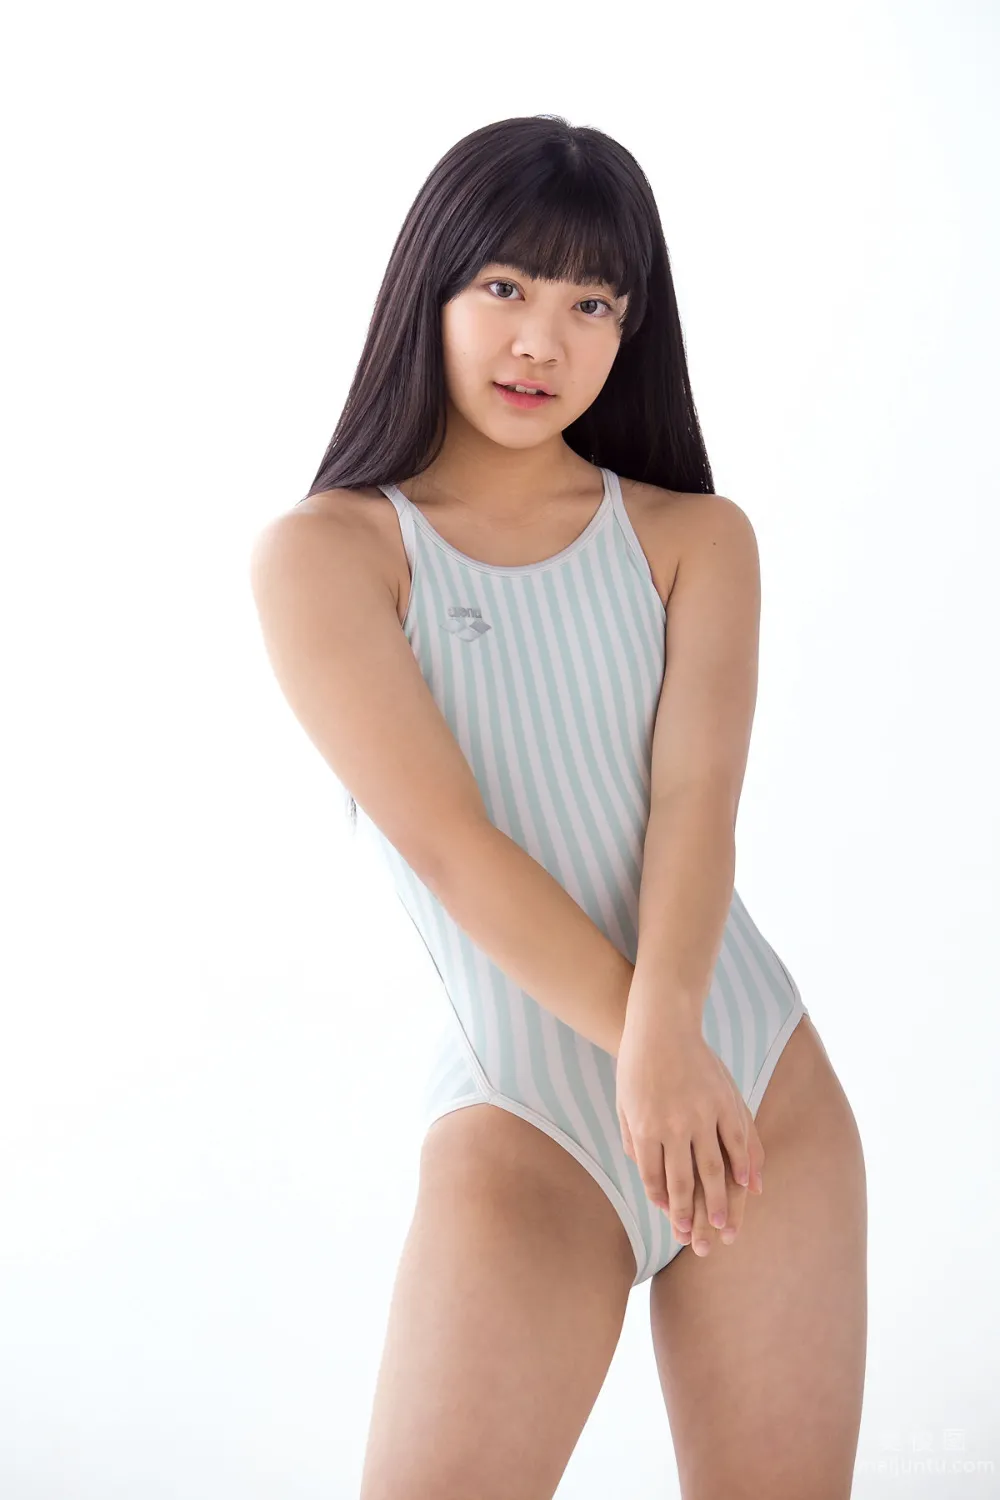 [Minisuka.tv] Saria Natsume 夏目咲莉愛 - Premium Gallery 3.119